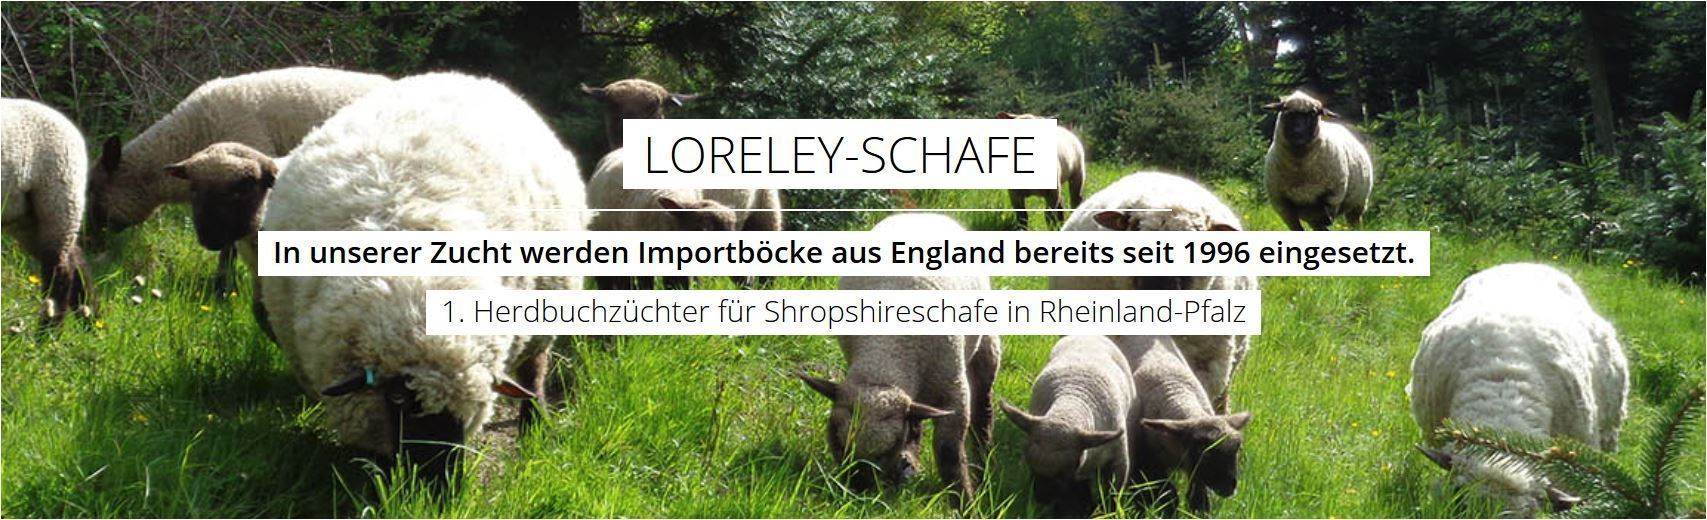 https://www.loreley-schafe.de/